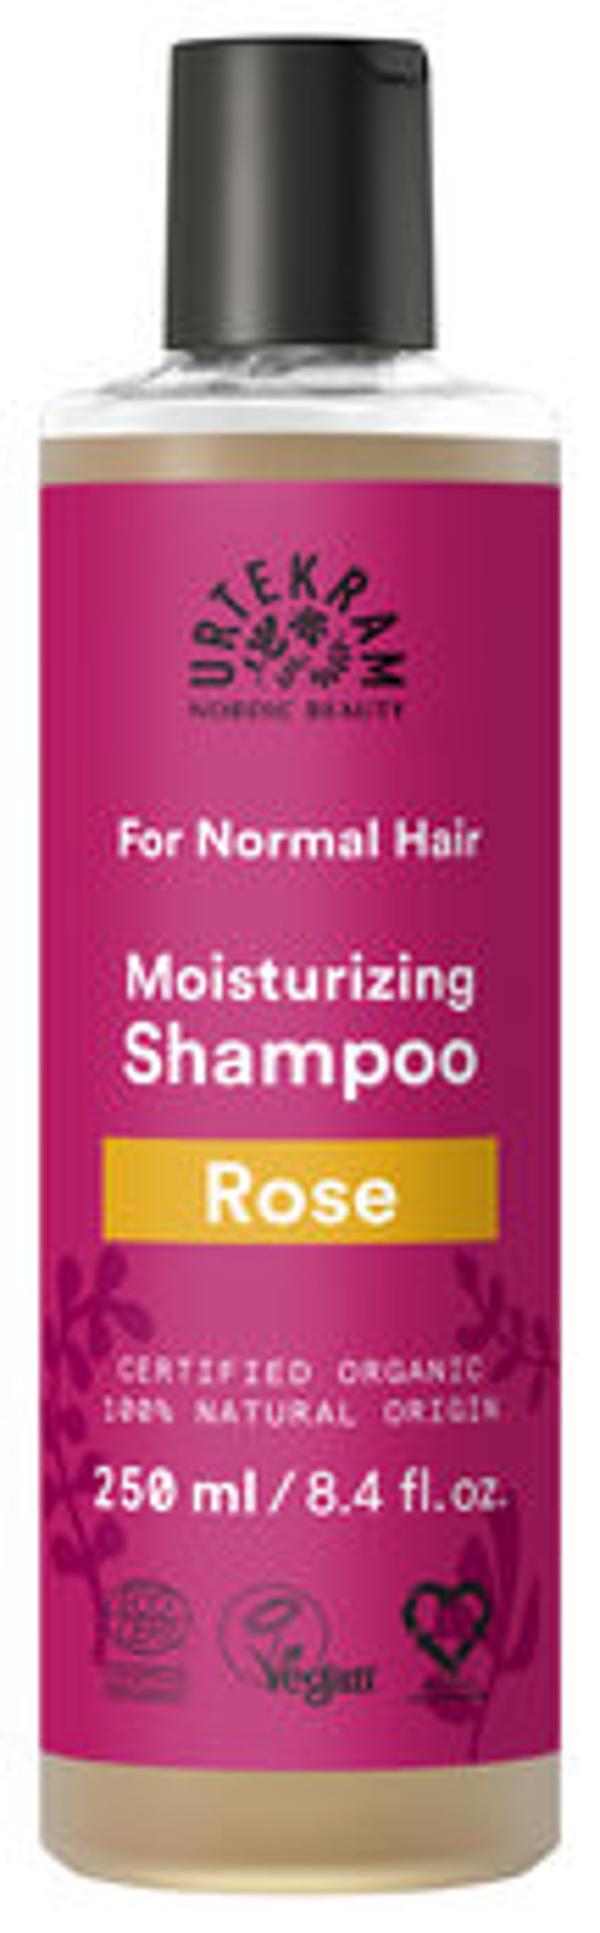 Produktfoto zu Moisturizing Rose Shampoo